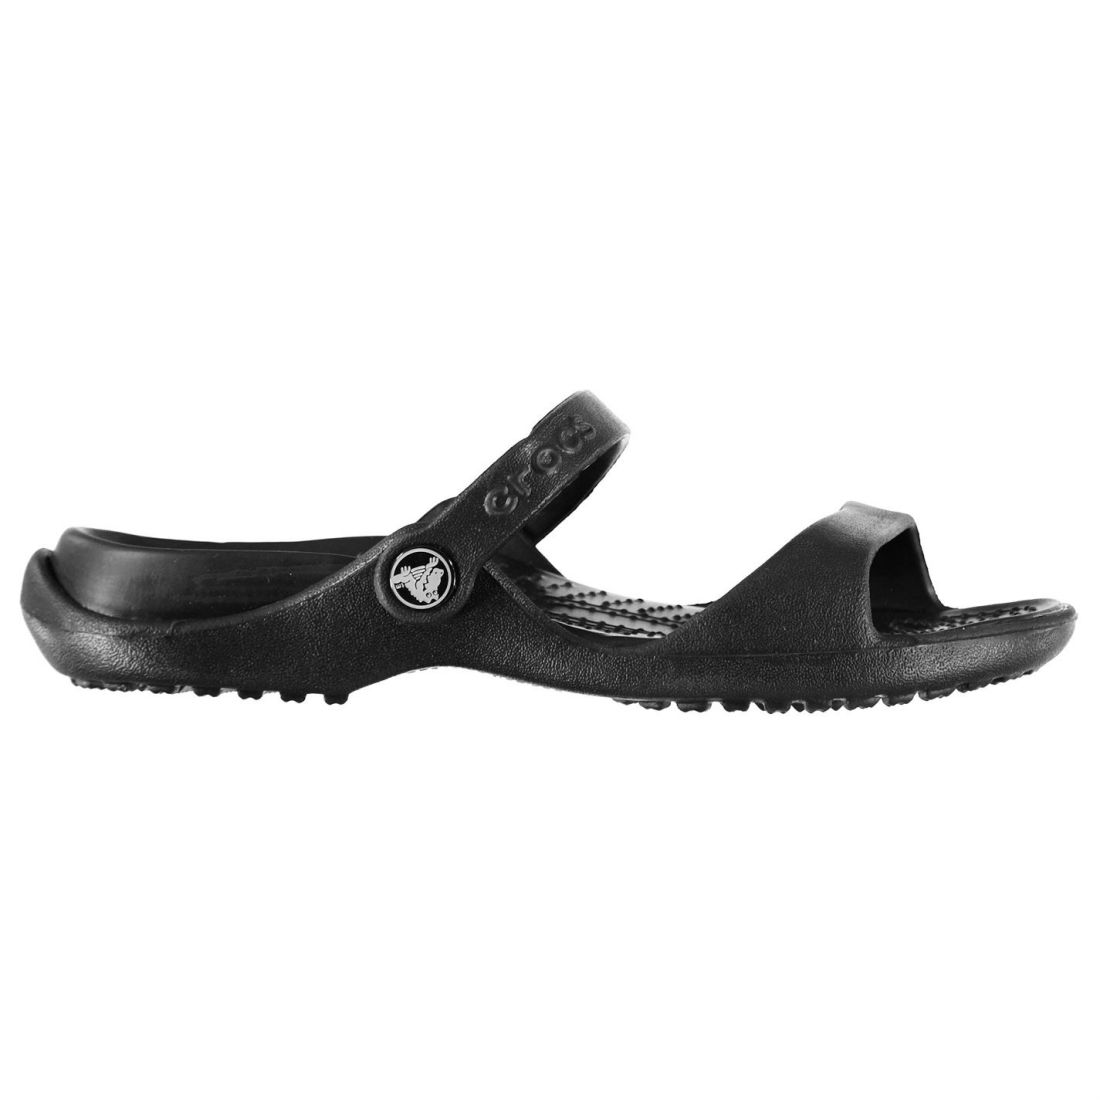 Crocs Womens Cleo Sandals Flat Slip On Ankle Strap Lightweight Open Toe